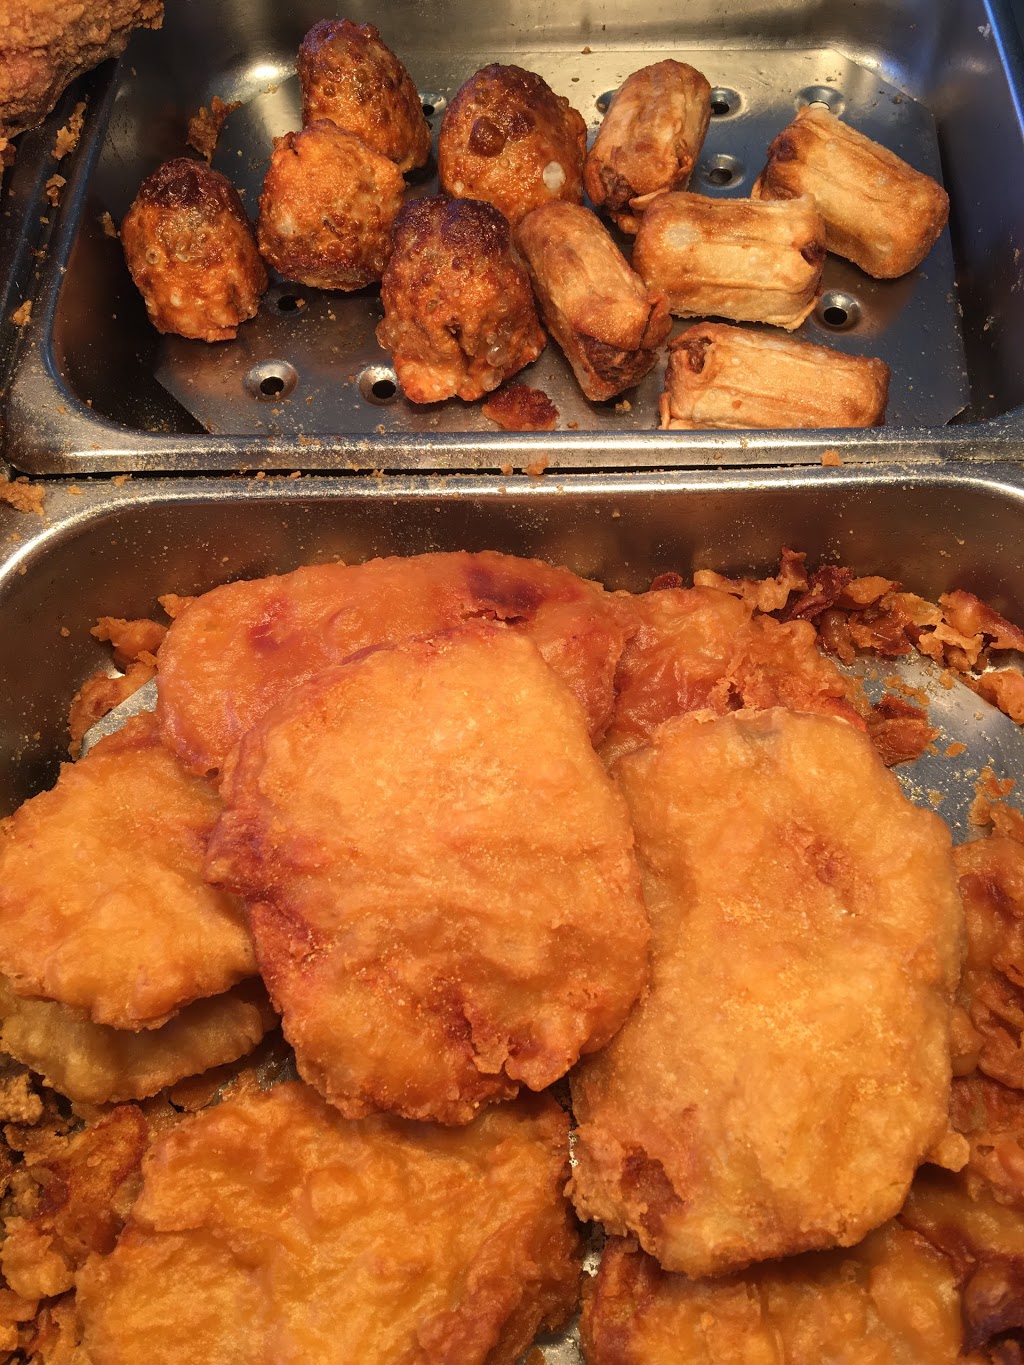 Deep Blue Sea Fish n Chips & Chicken Bar | meal takeaway | Shop 3/112-120 Main Rd E, St Albans VIC 3021, Australia | 0393560588 OR +61 3 9356 0588